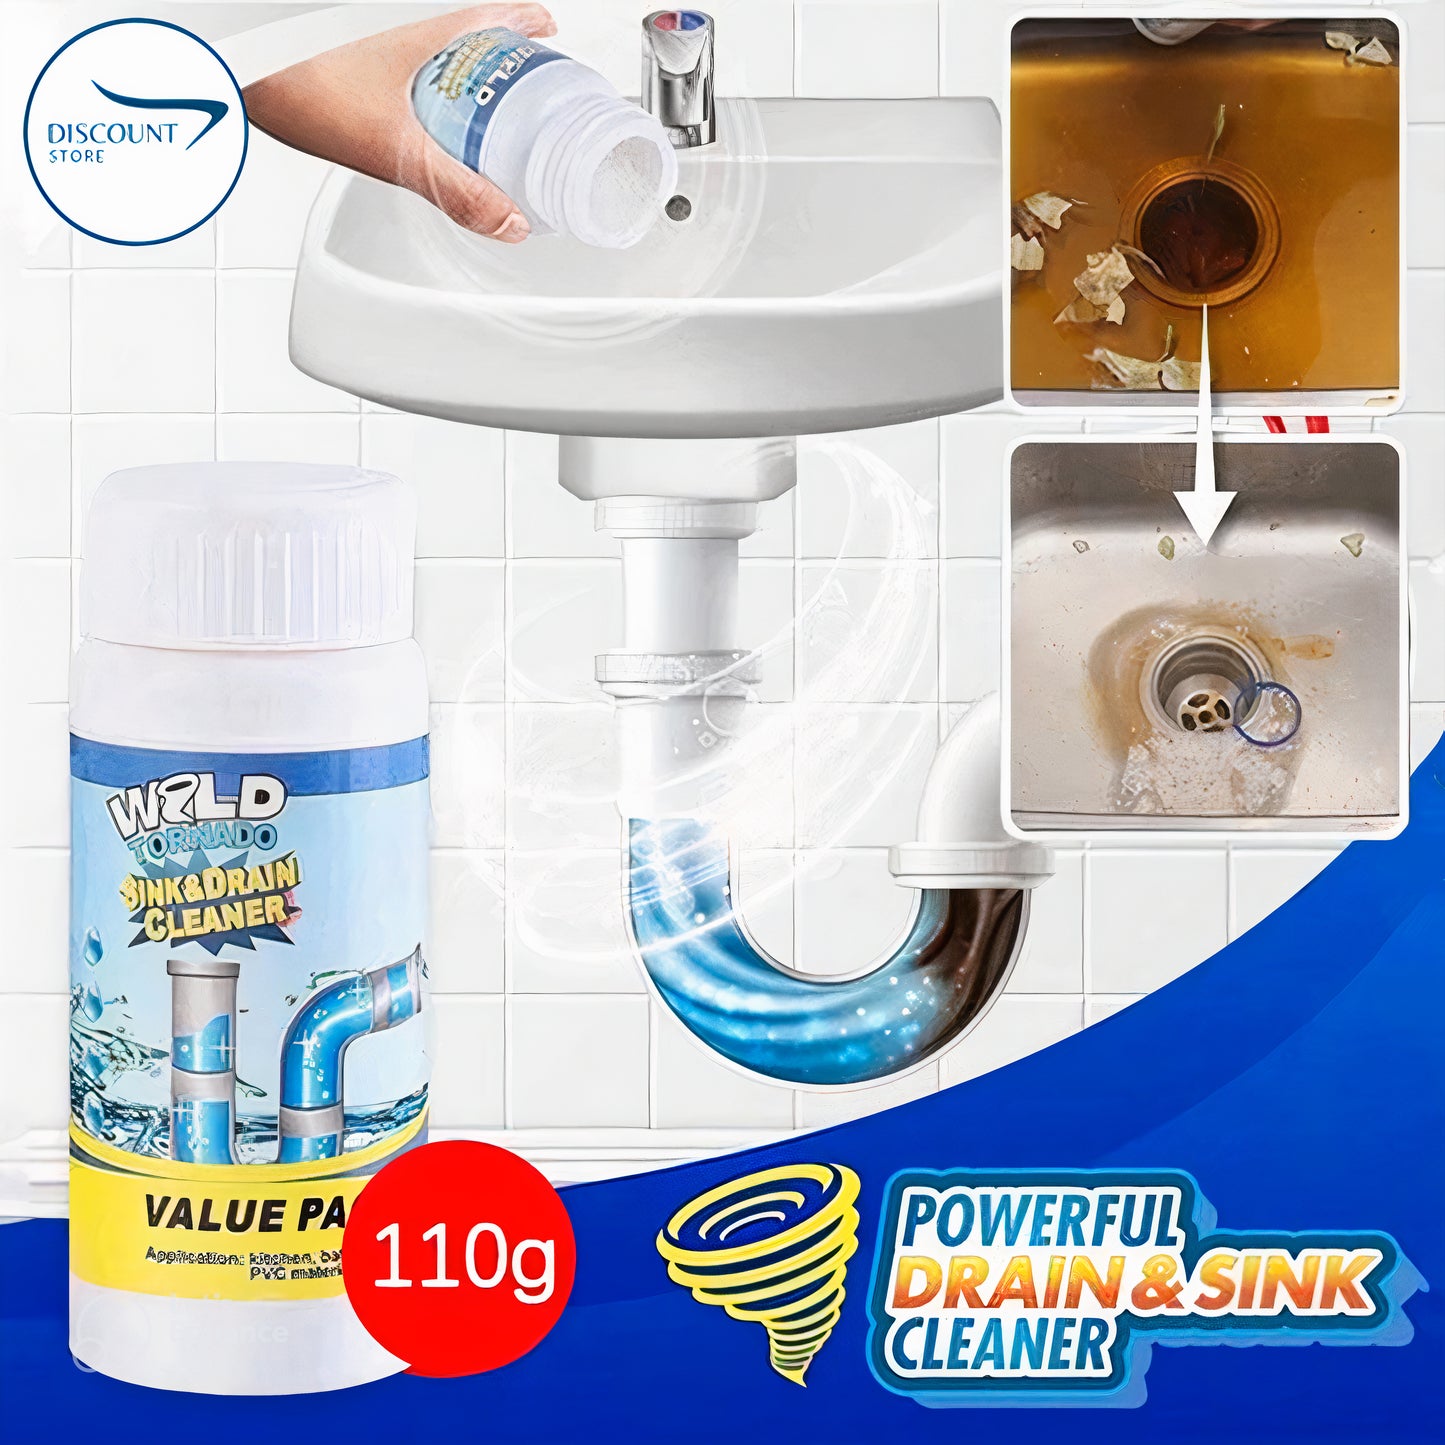 SALE - Powerful Sink & Drain Cleaner | Buy 1 Get 1 Free Offer